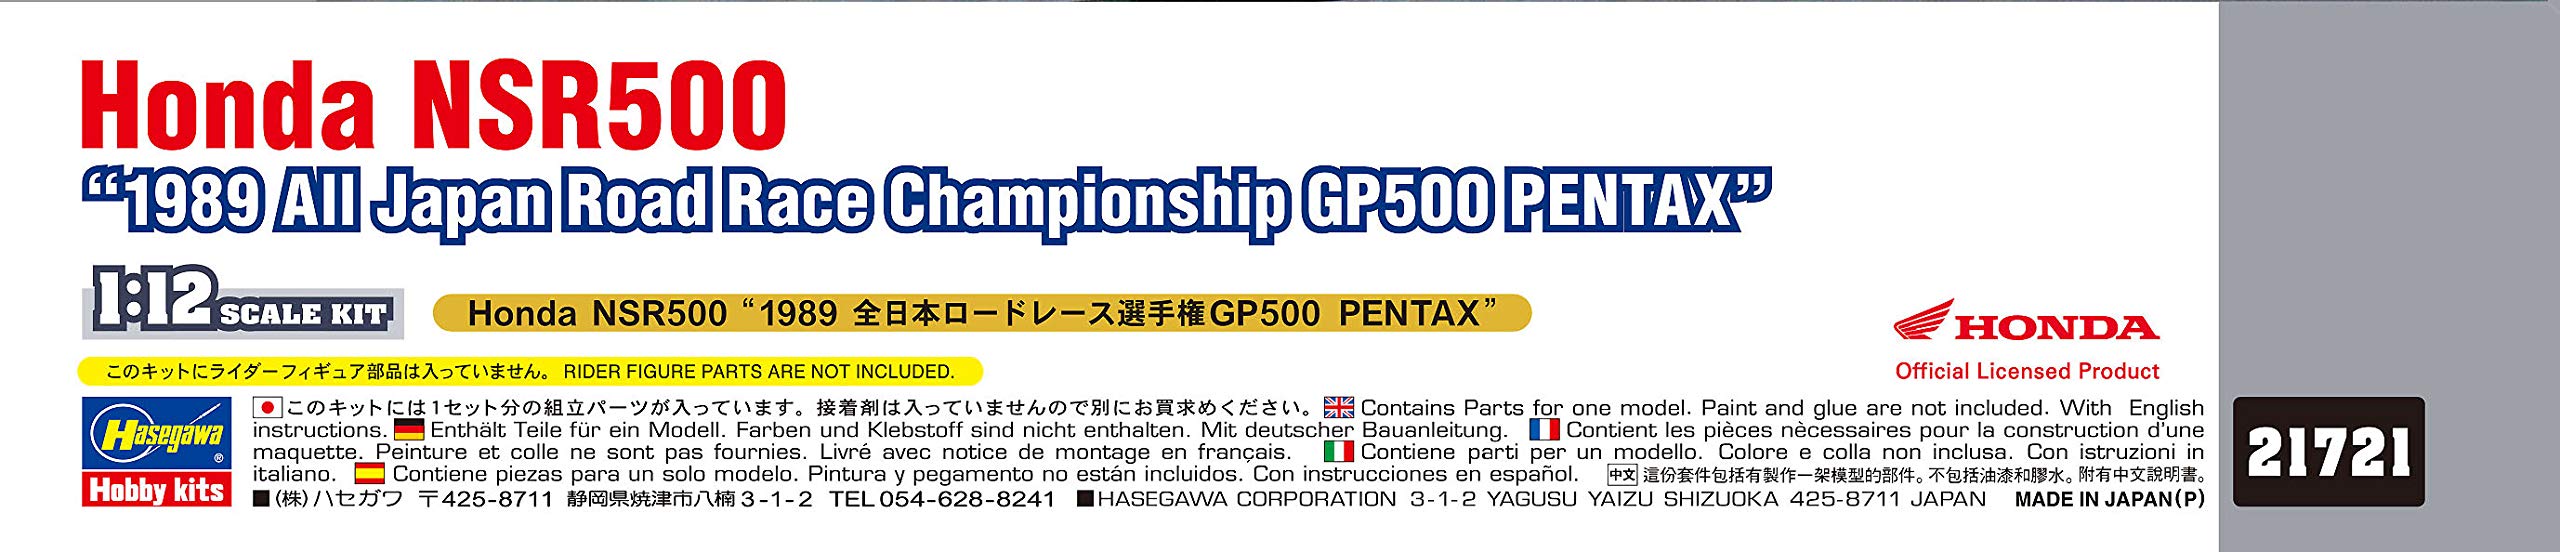 HASEGAWA 21721 Honda Nsr500 1989 Japan Road Race Championship Gp500 Pentax 1/12 Scale Kit